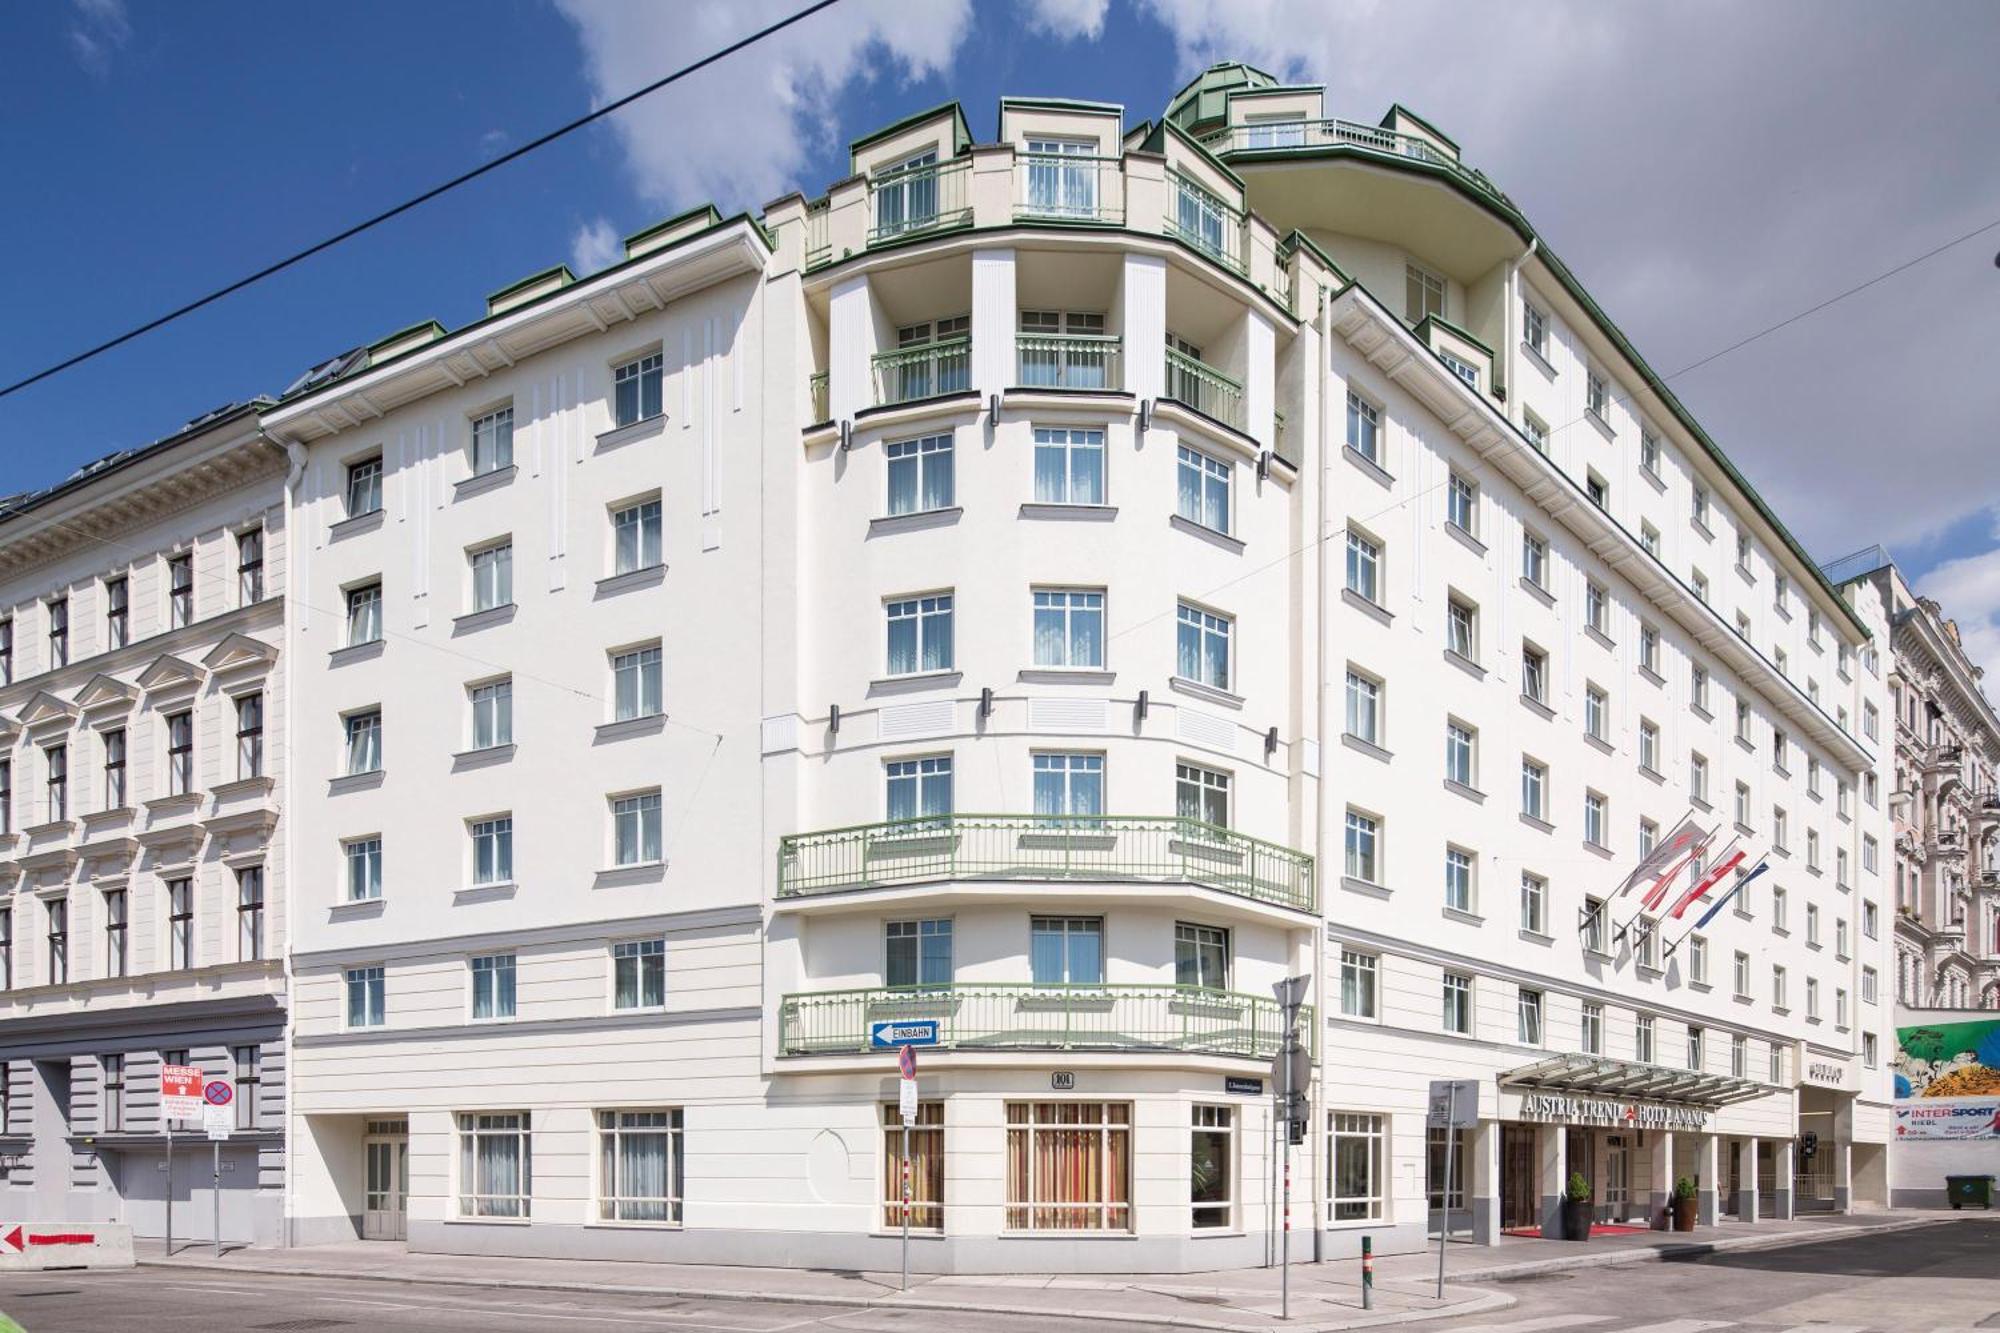 Austria Trend Hotel Ananas Wien Exterior foto